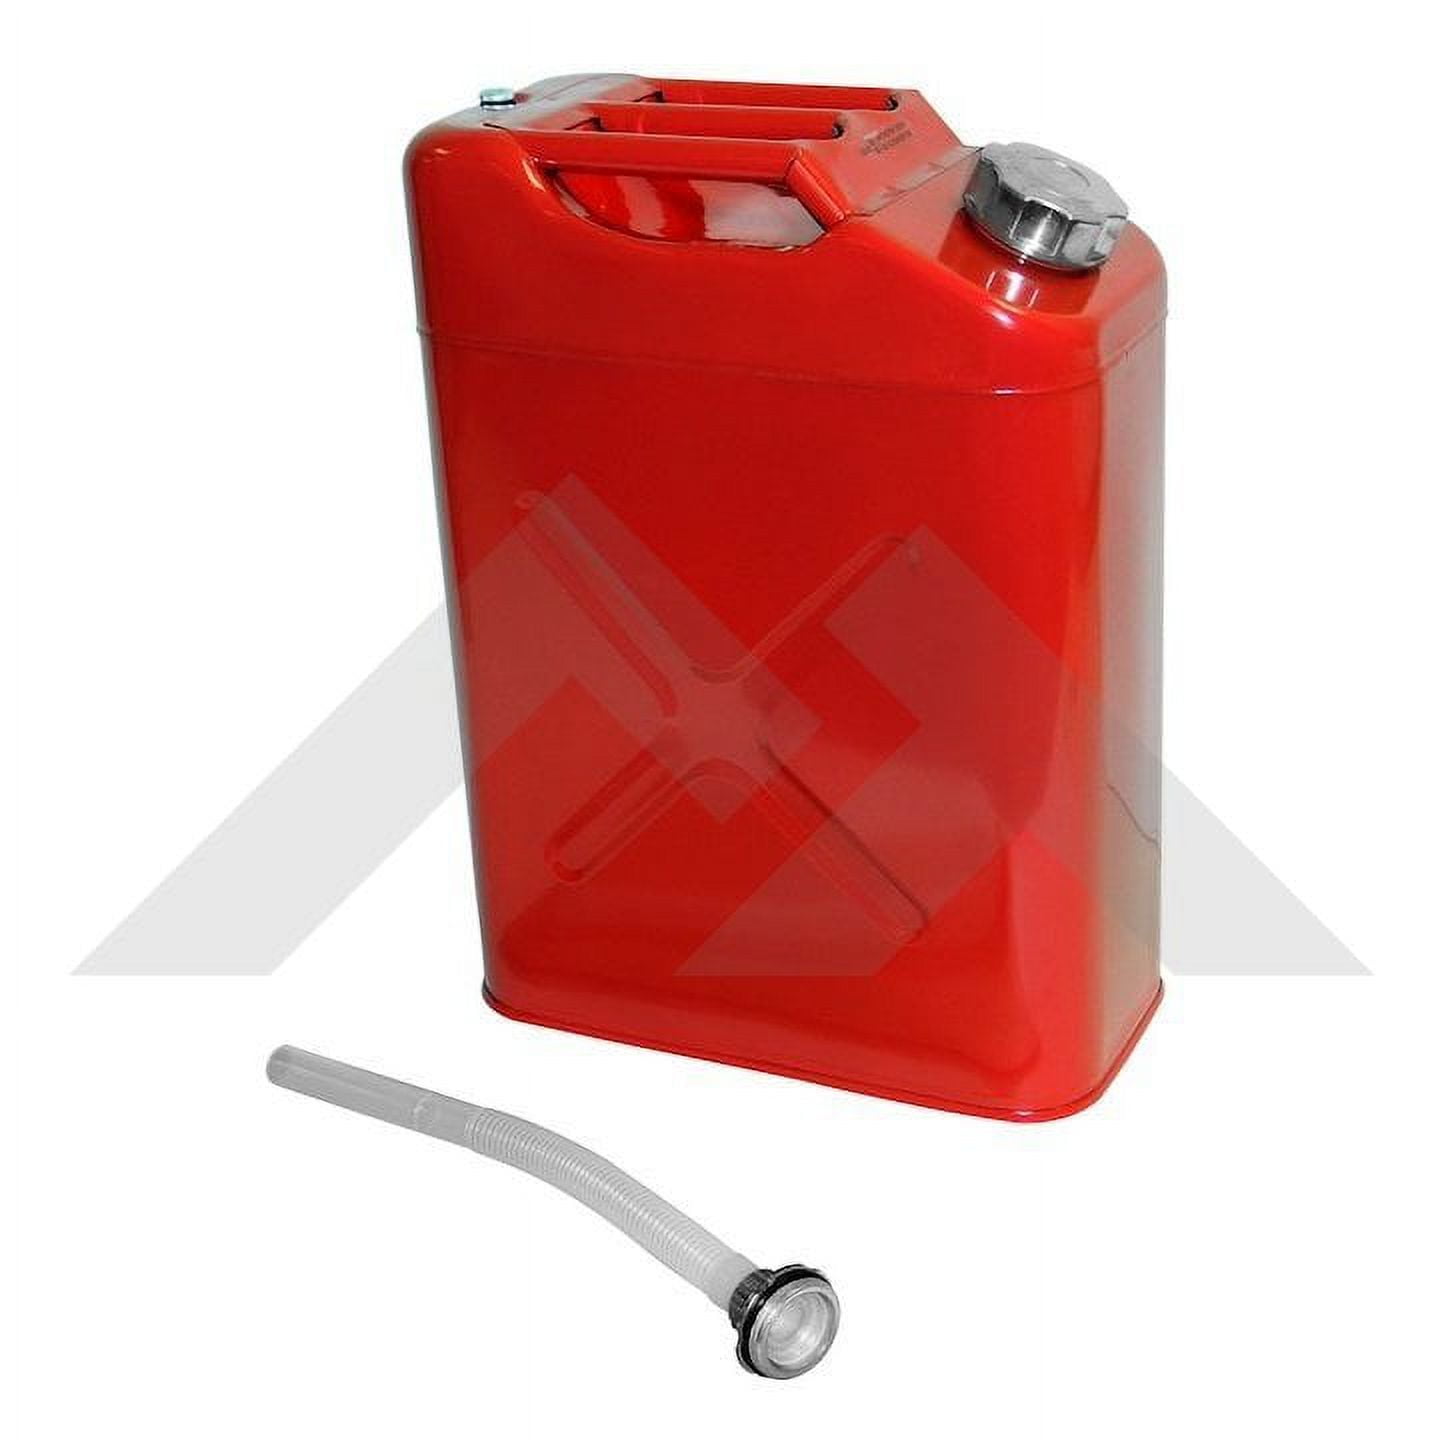 Pressol Petrol Canister 10 Liter, Red